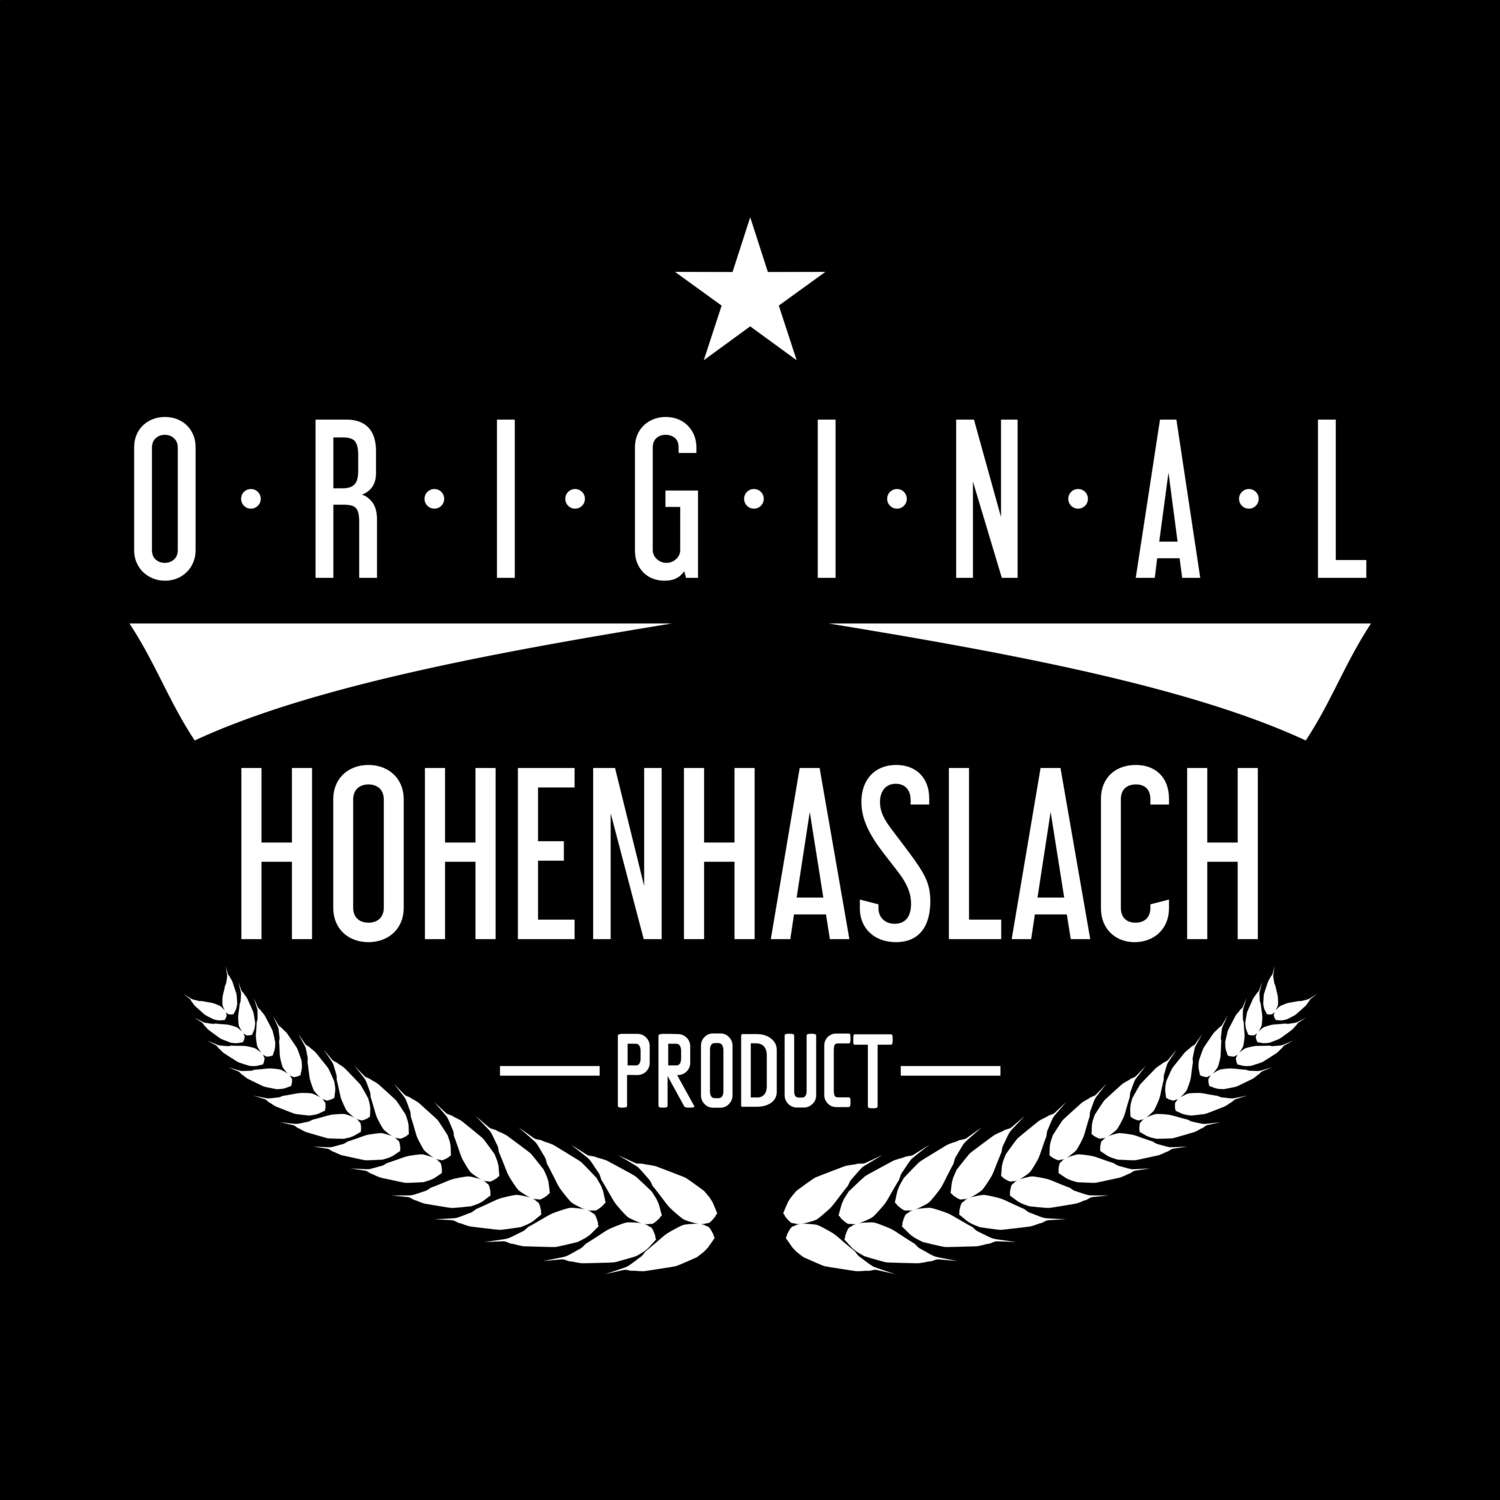 Hohenhaslach T-Shirt »Original Product«